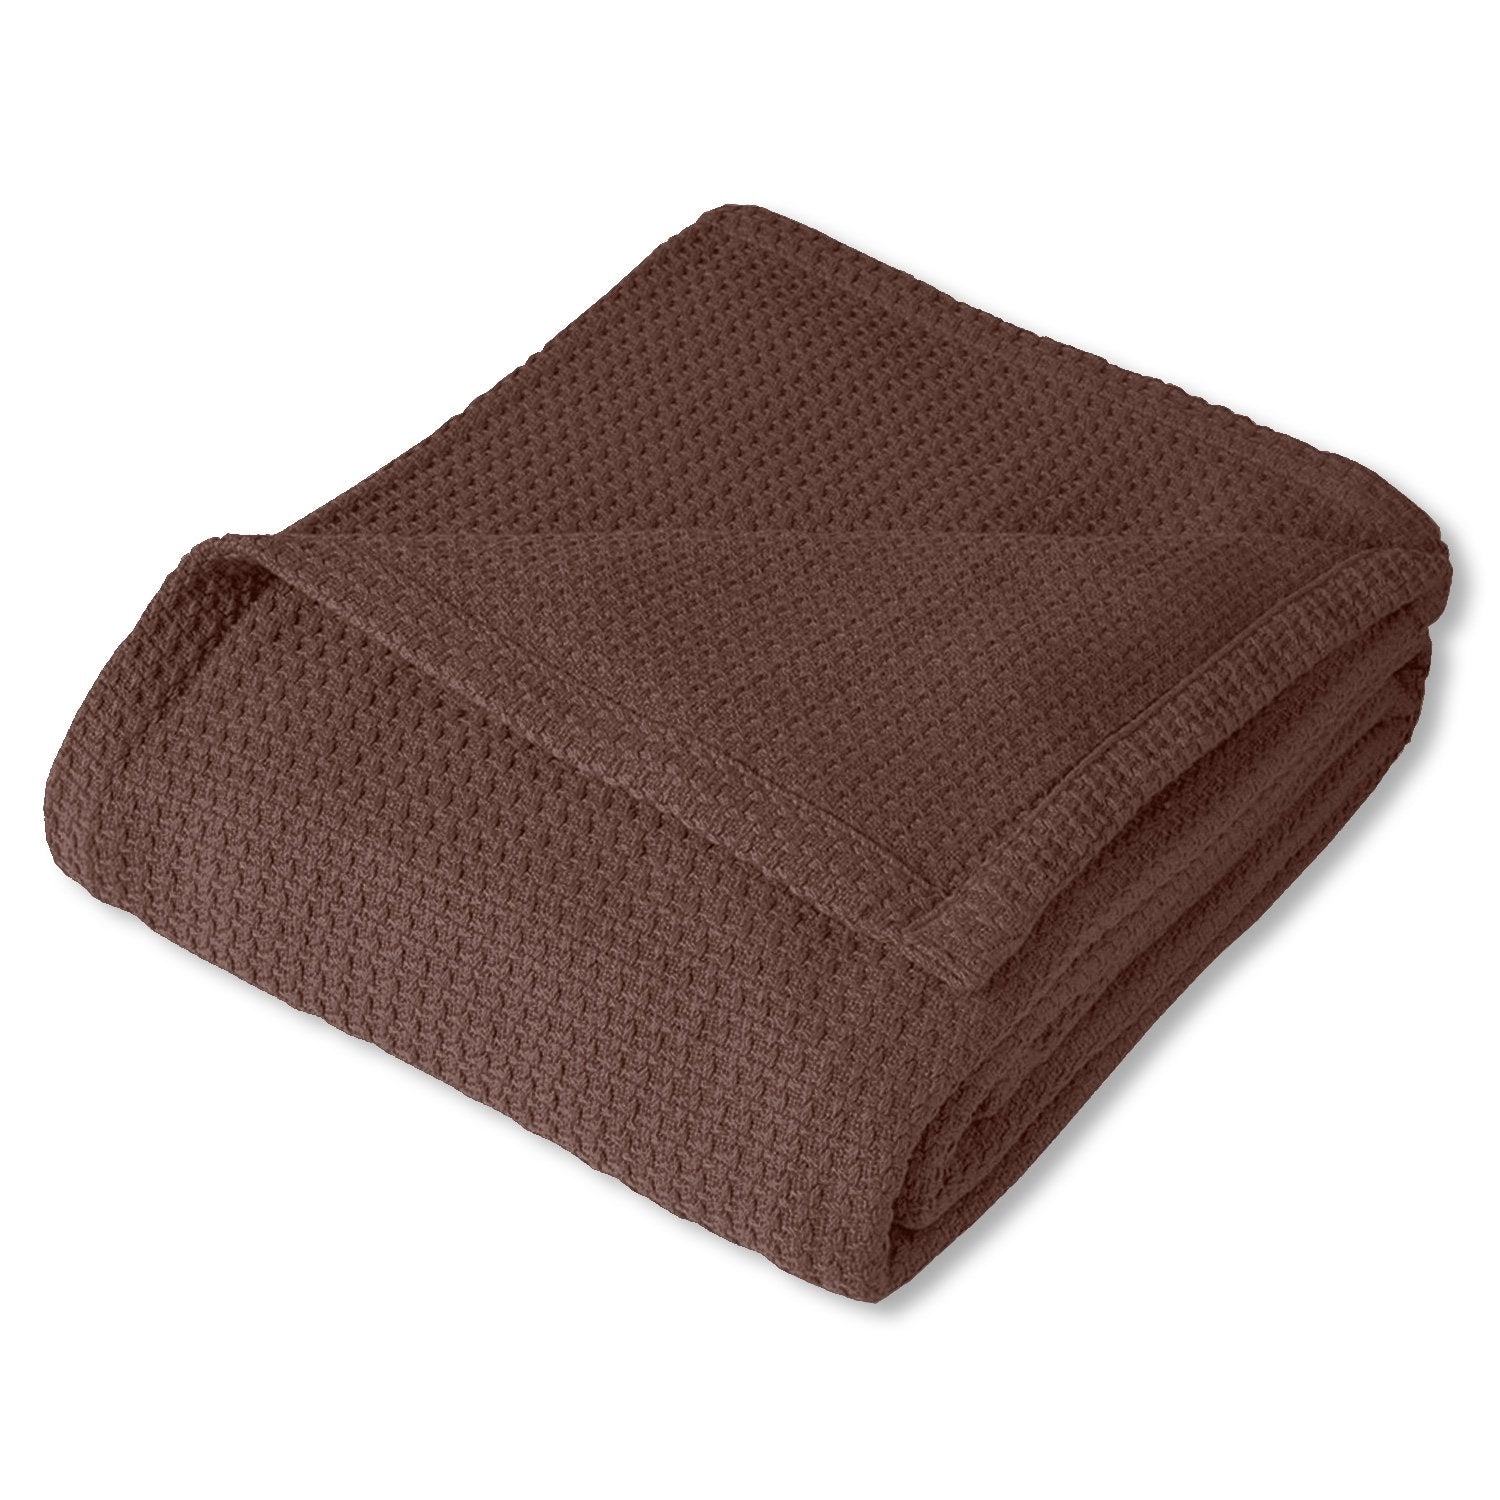 Basket Weave Cotton Blanket Chocolate - Folded